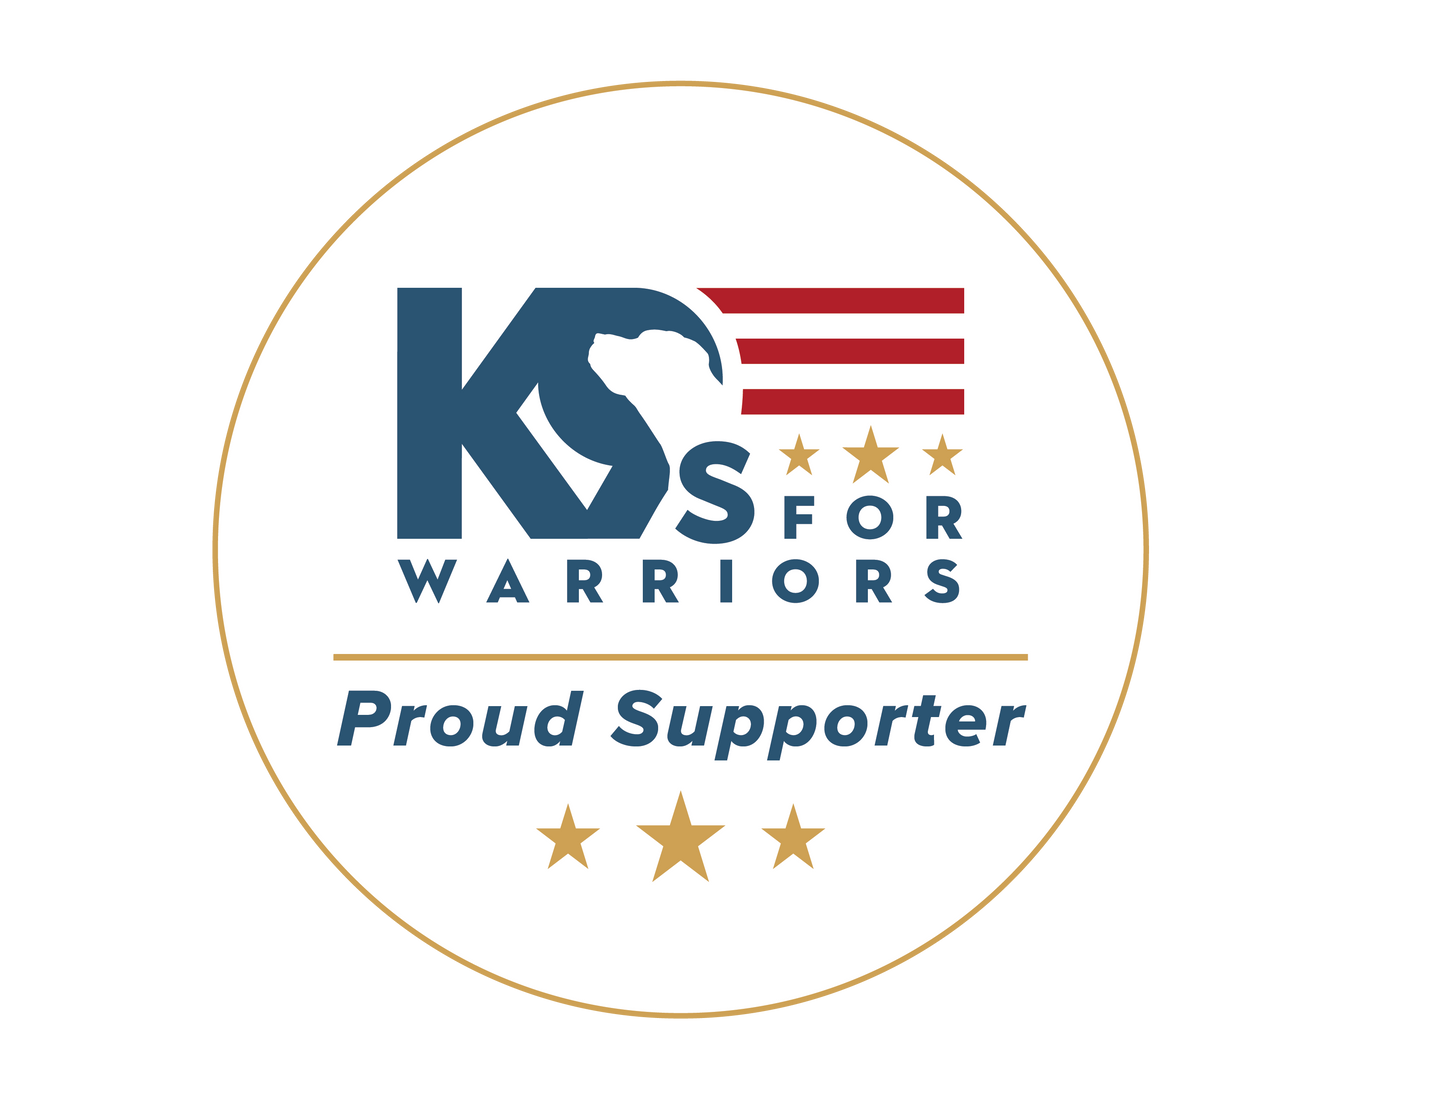 K9s For Warriors Proud Supporter